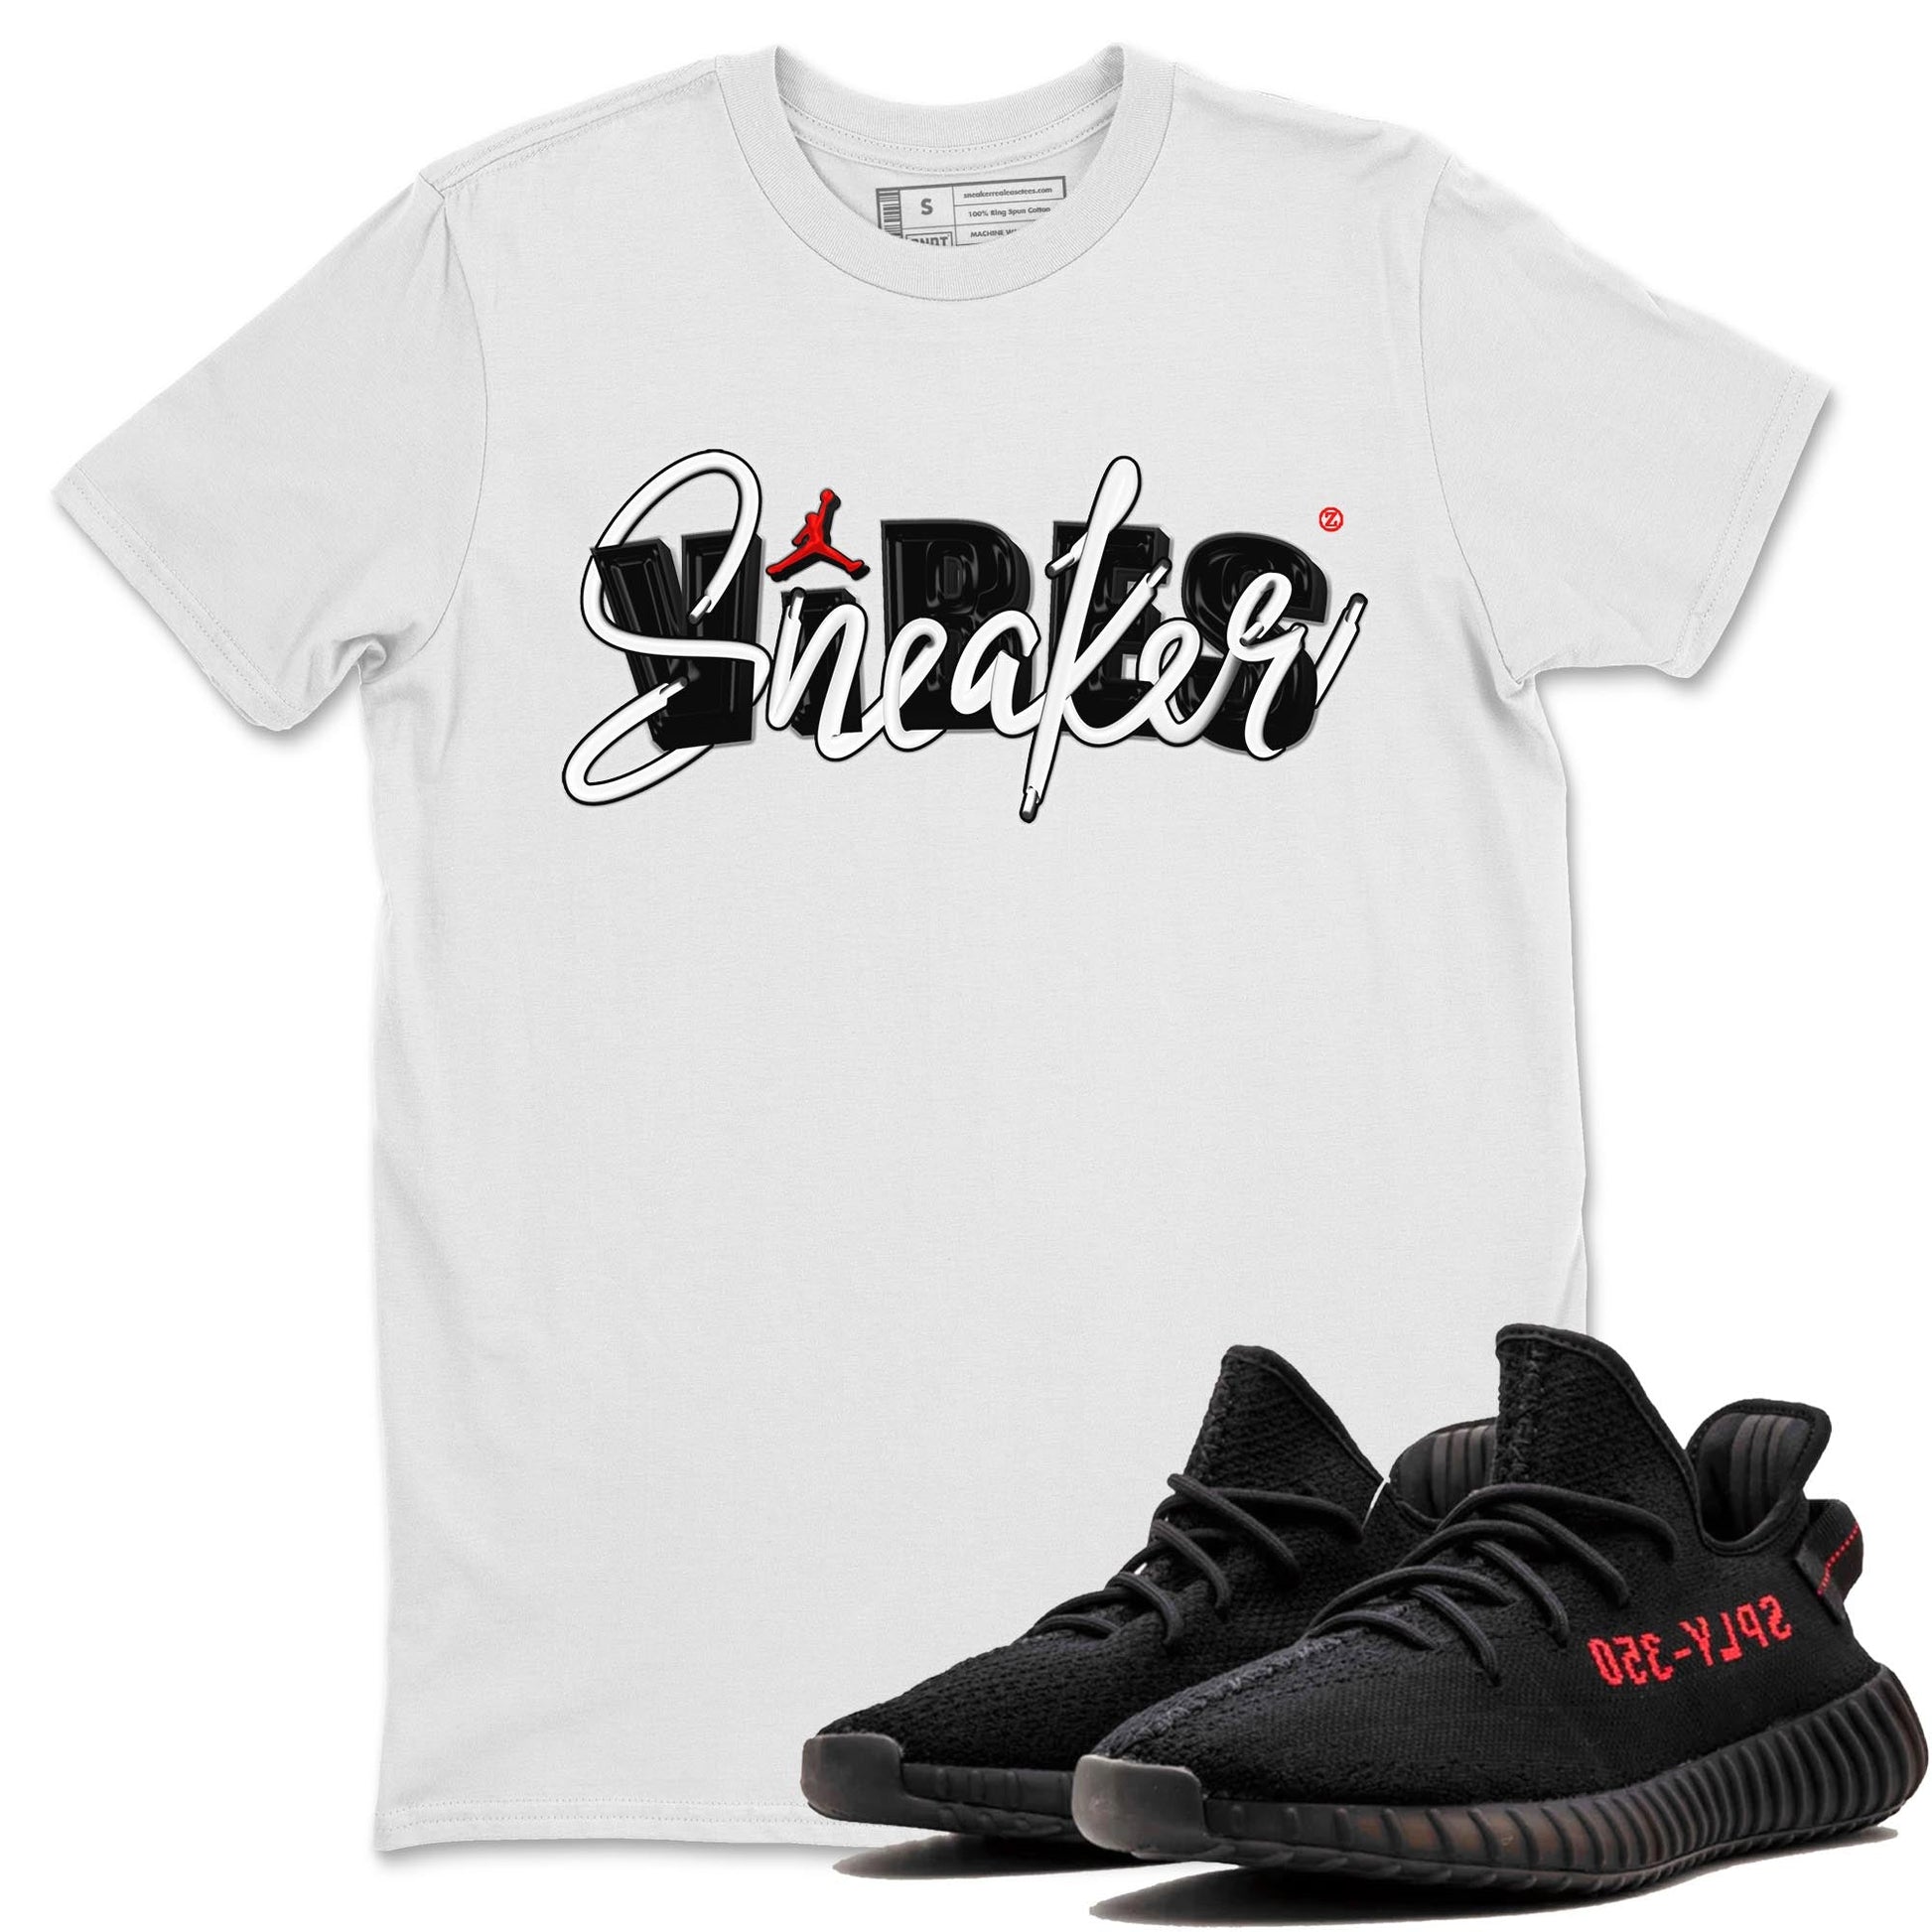 Yeezy 350 Bred shirt to match jordans Sneaker Vibes Streetwear Sneaker Shirt Yeezy Boost 350 V2 Bred Drip Gear Zone Sneaker Matching Clothing Unisex White 1 T-Shirt